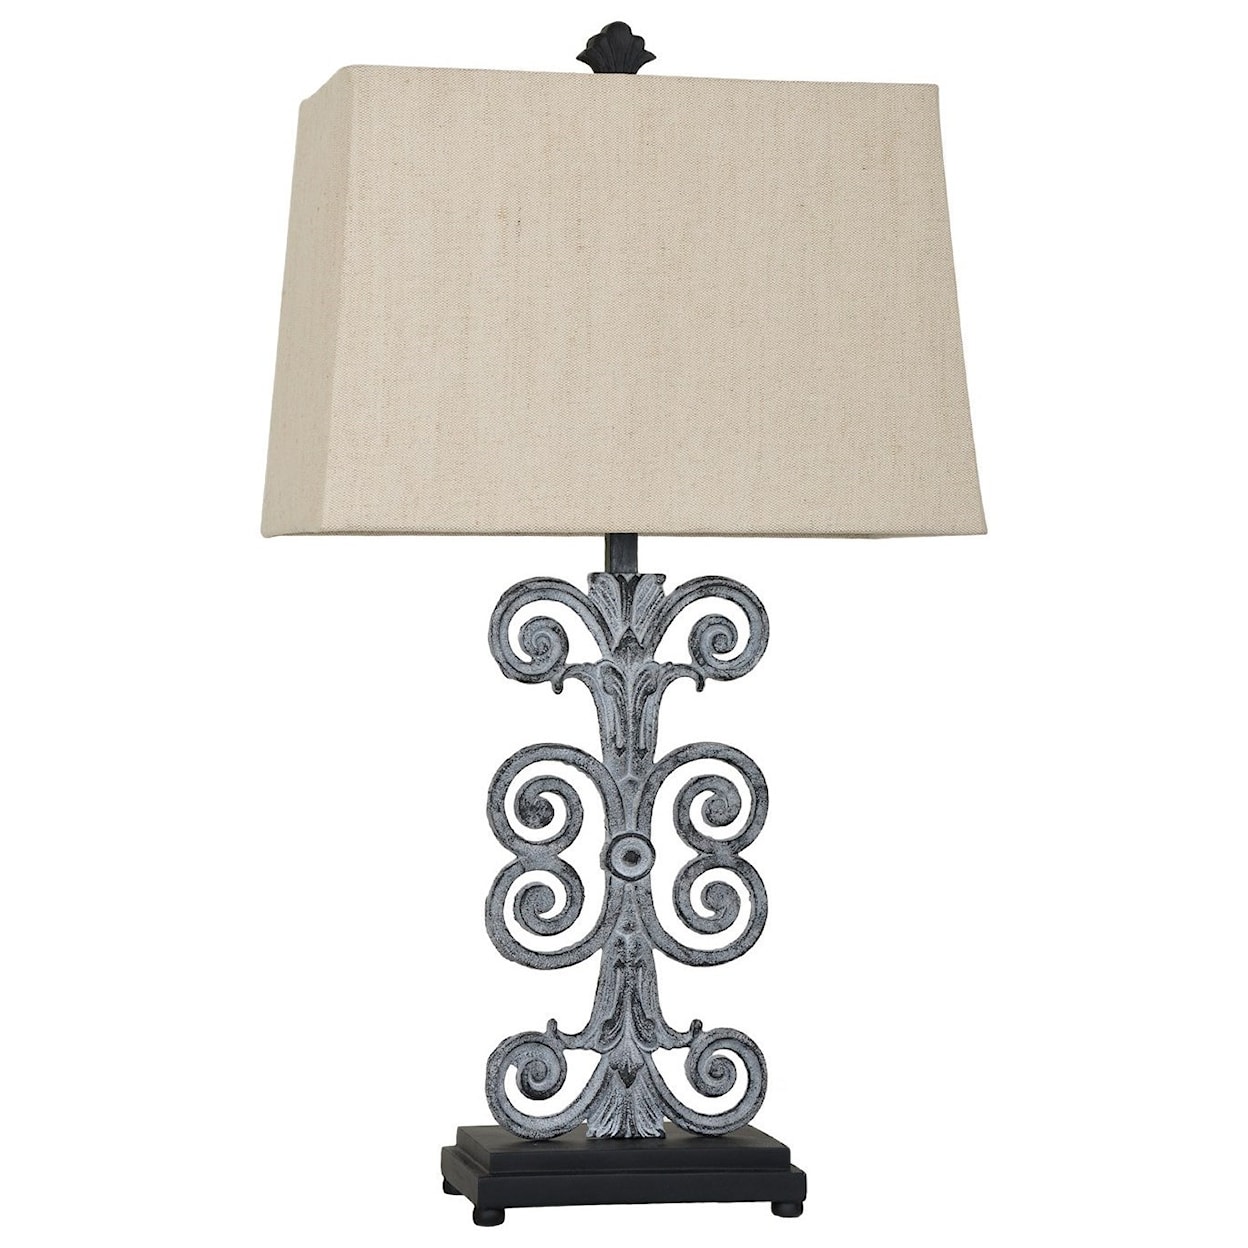 Crestview Collection Lighting Lazzaro Table Lamp